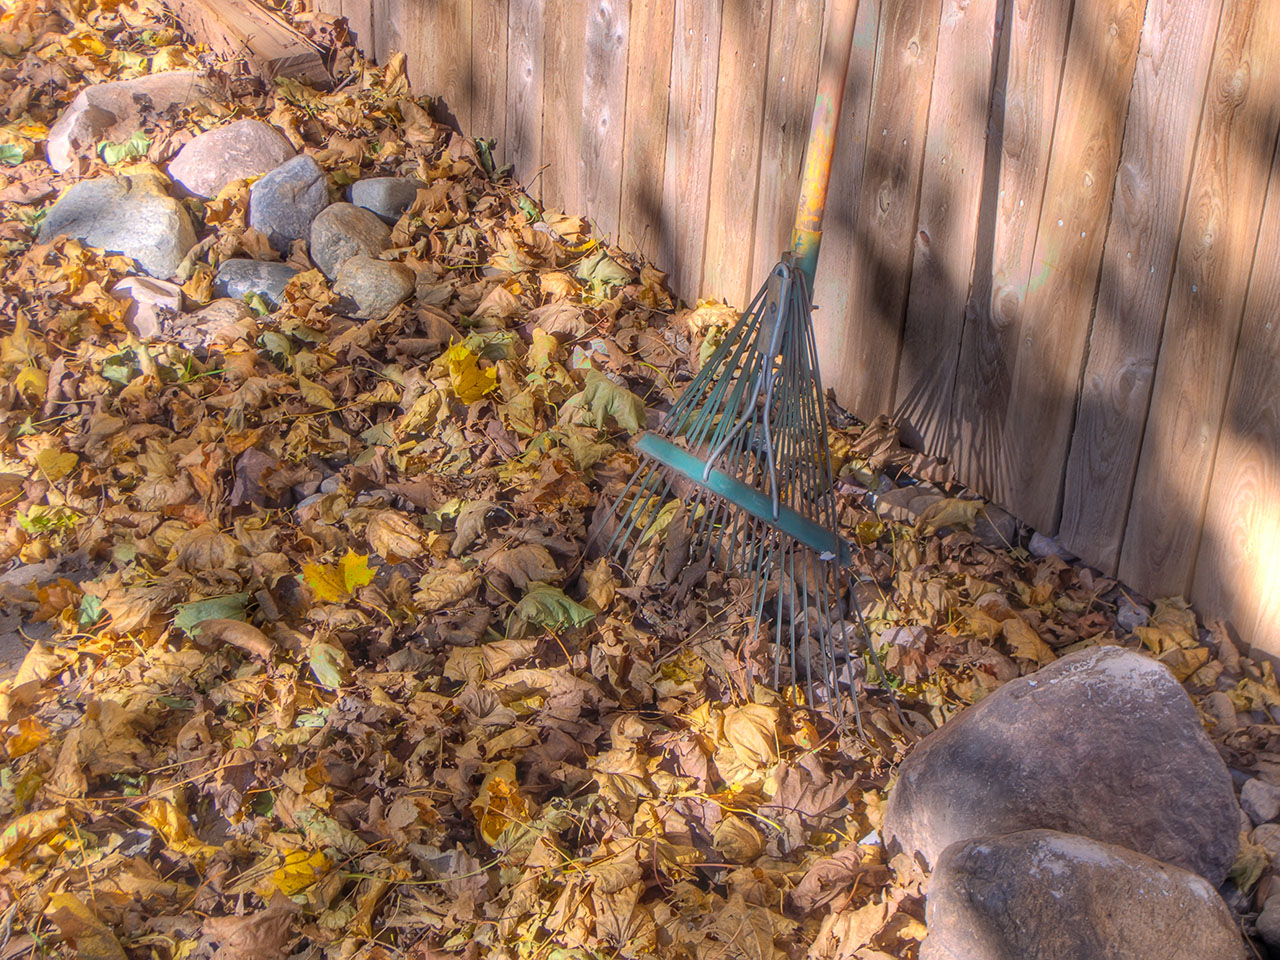 Leaves and a rake. (Credit: David Morris/ Flickr)